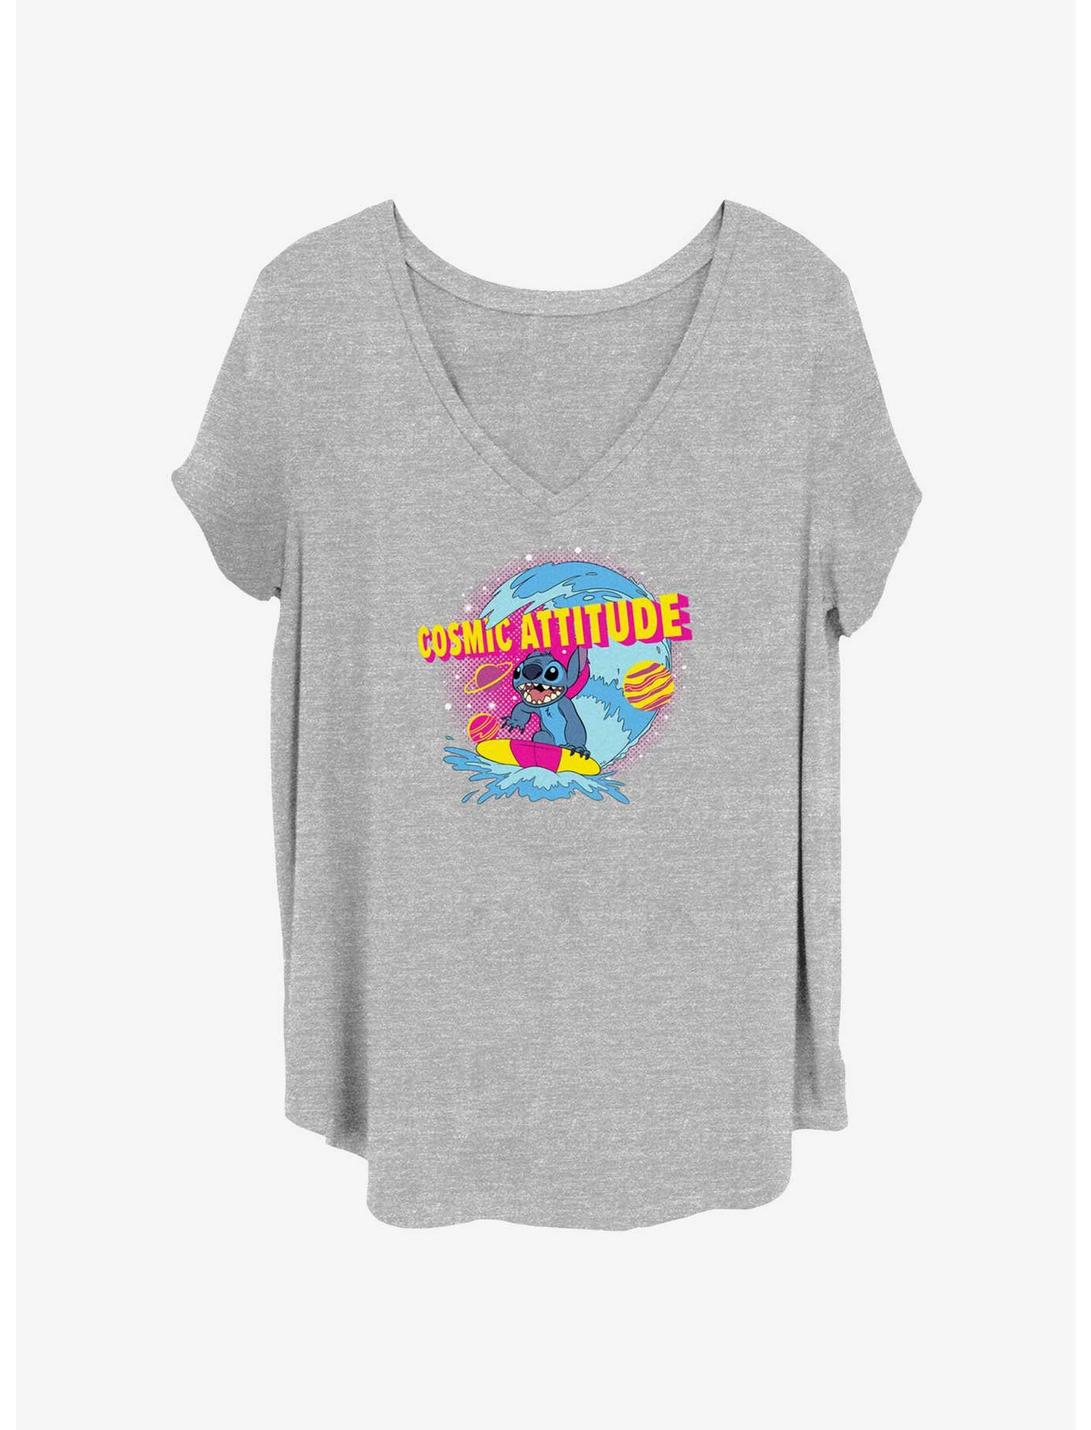 Disney Lilo & Stitch Cosmic Attitude Womens T-Shirt Plus Size, HEATHER GR, hi-res